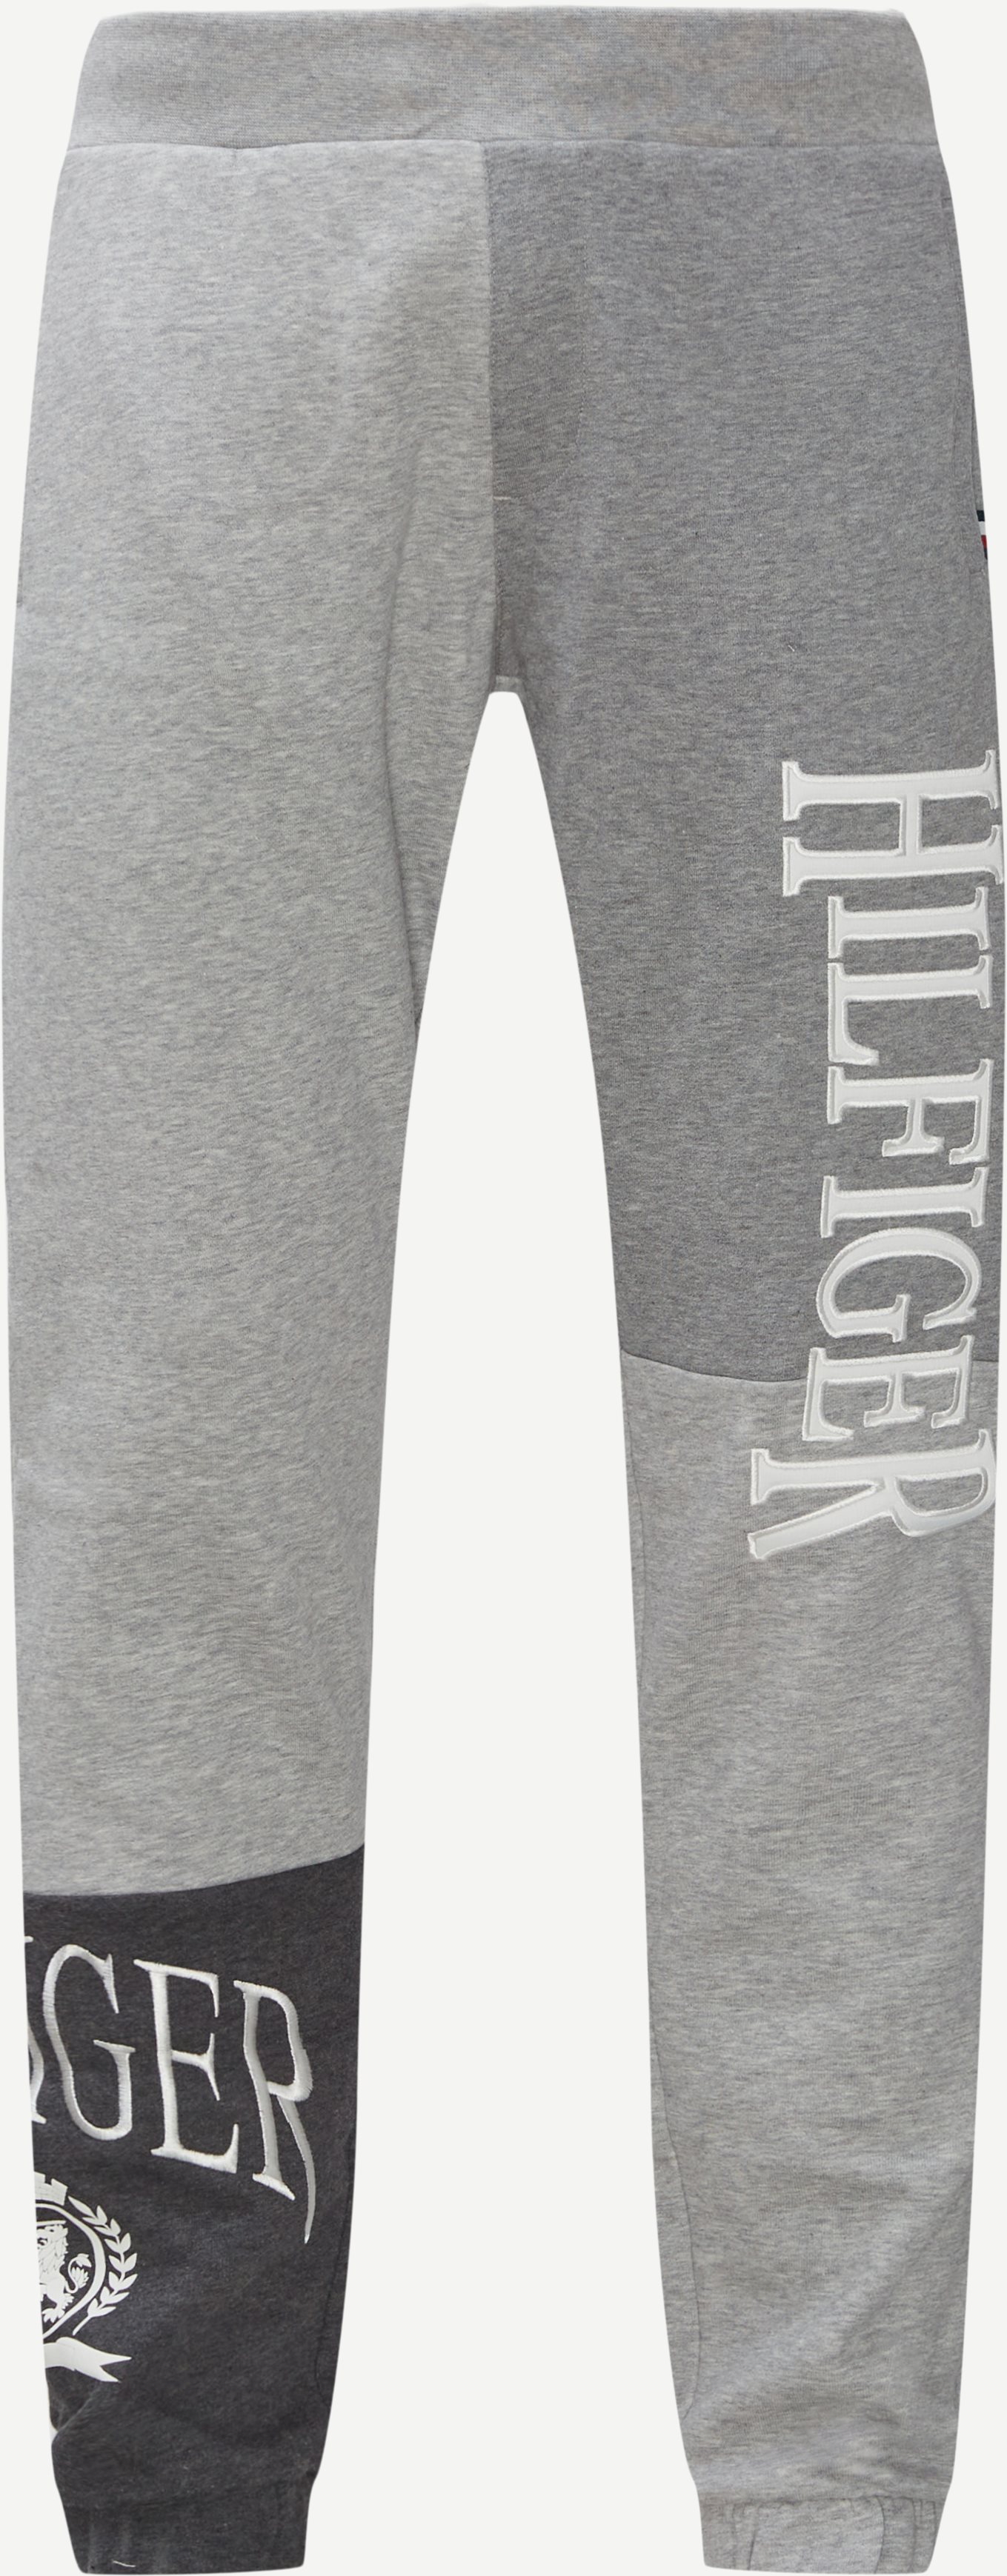 Trousers - Regular fit - Grey